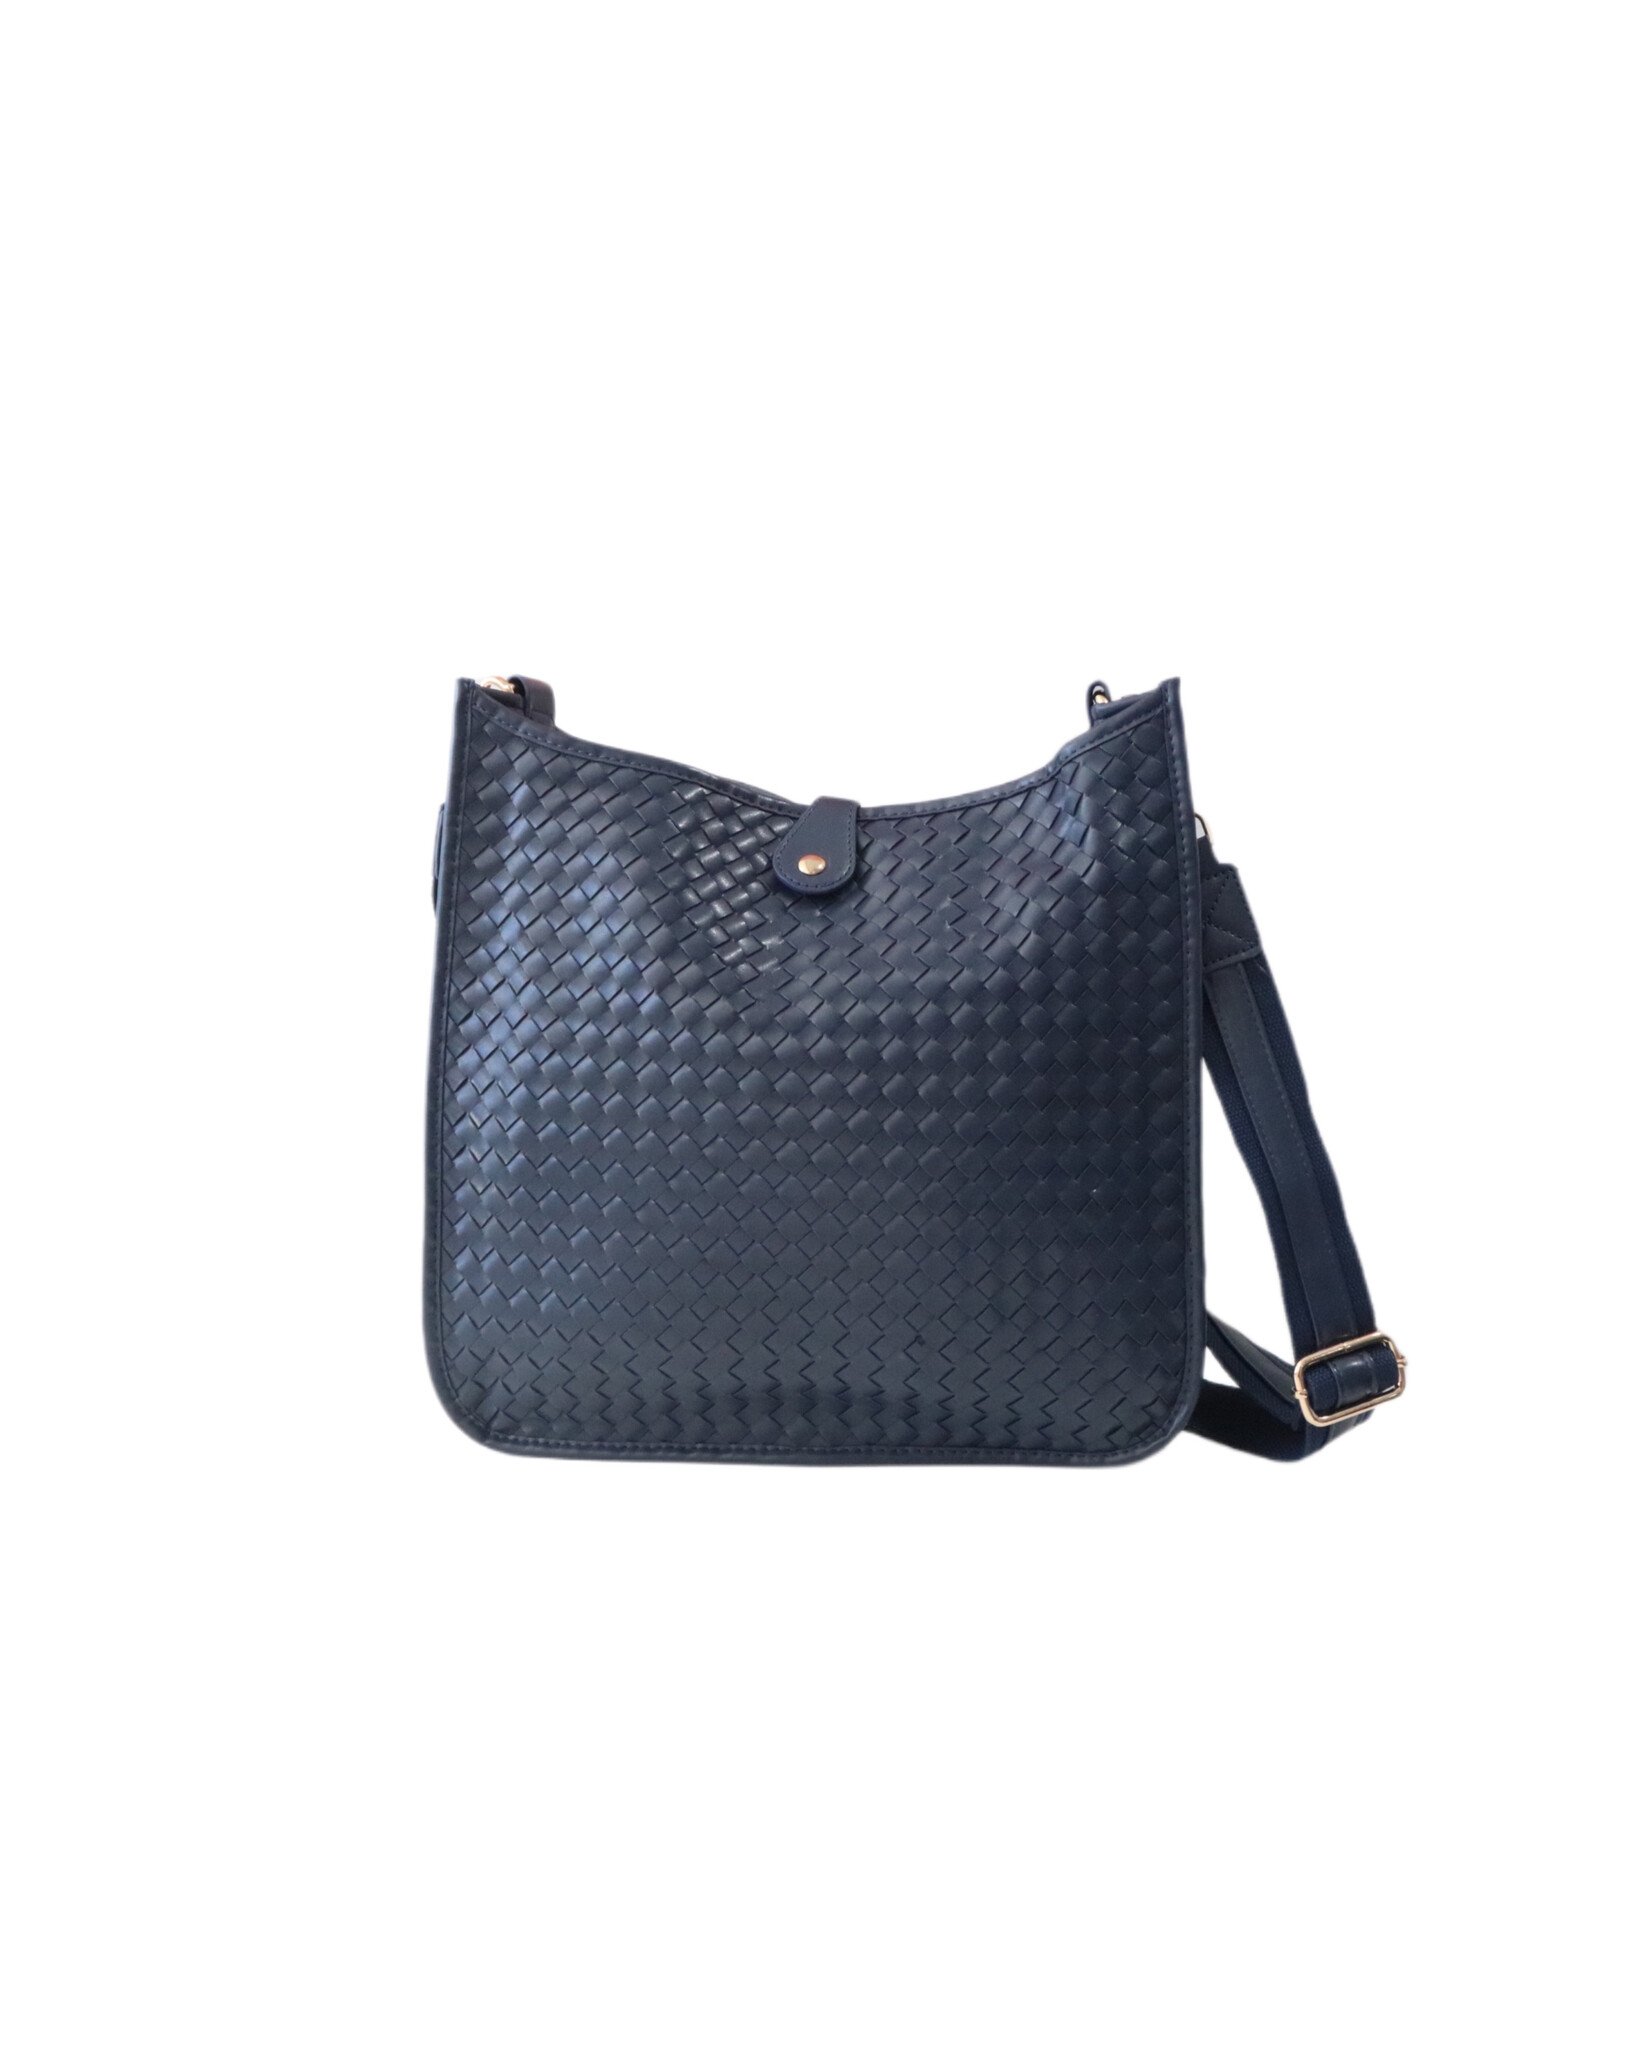 Crossbody Purses for Women Lightweight Small Travel Bag Shoulder Purses and  Handbags with Multi Zipper Pockets Gift - Navy Blue - Walmart.com